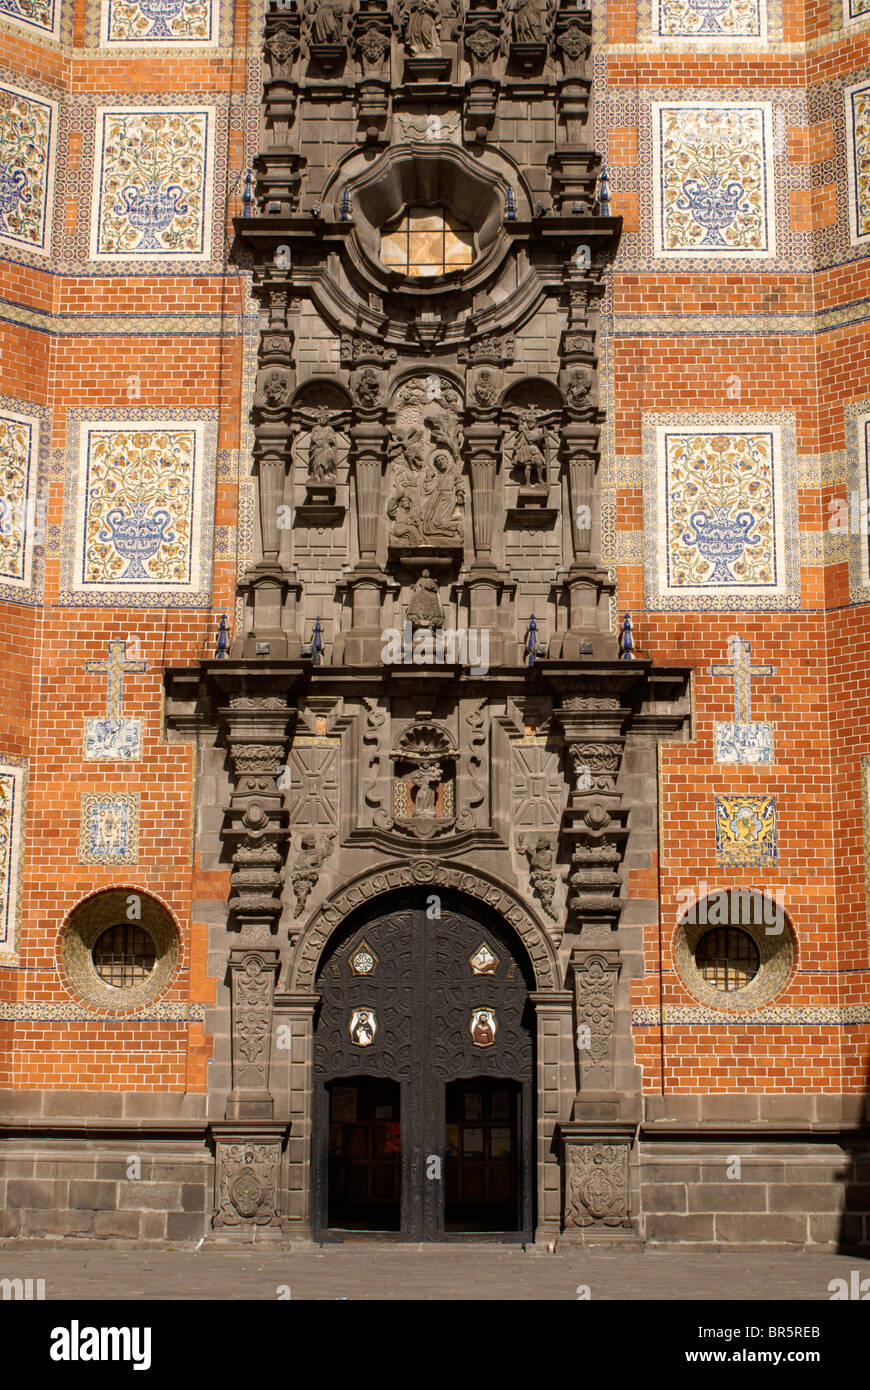 Carreaux Talavera de la façade de style baroque mexicain Templo San Francisco church dans la ville de Puebla, Mexique Banque D'Images